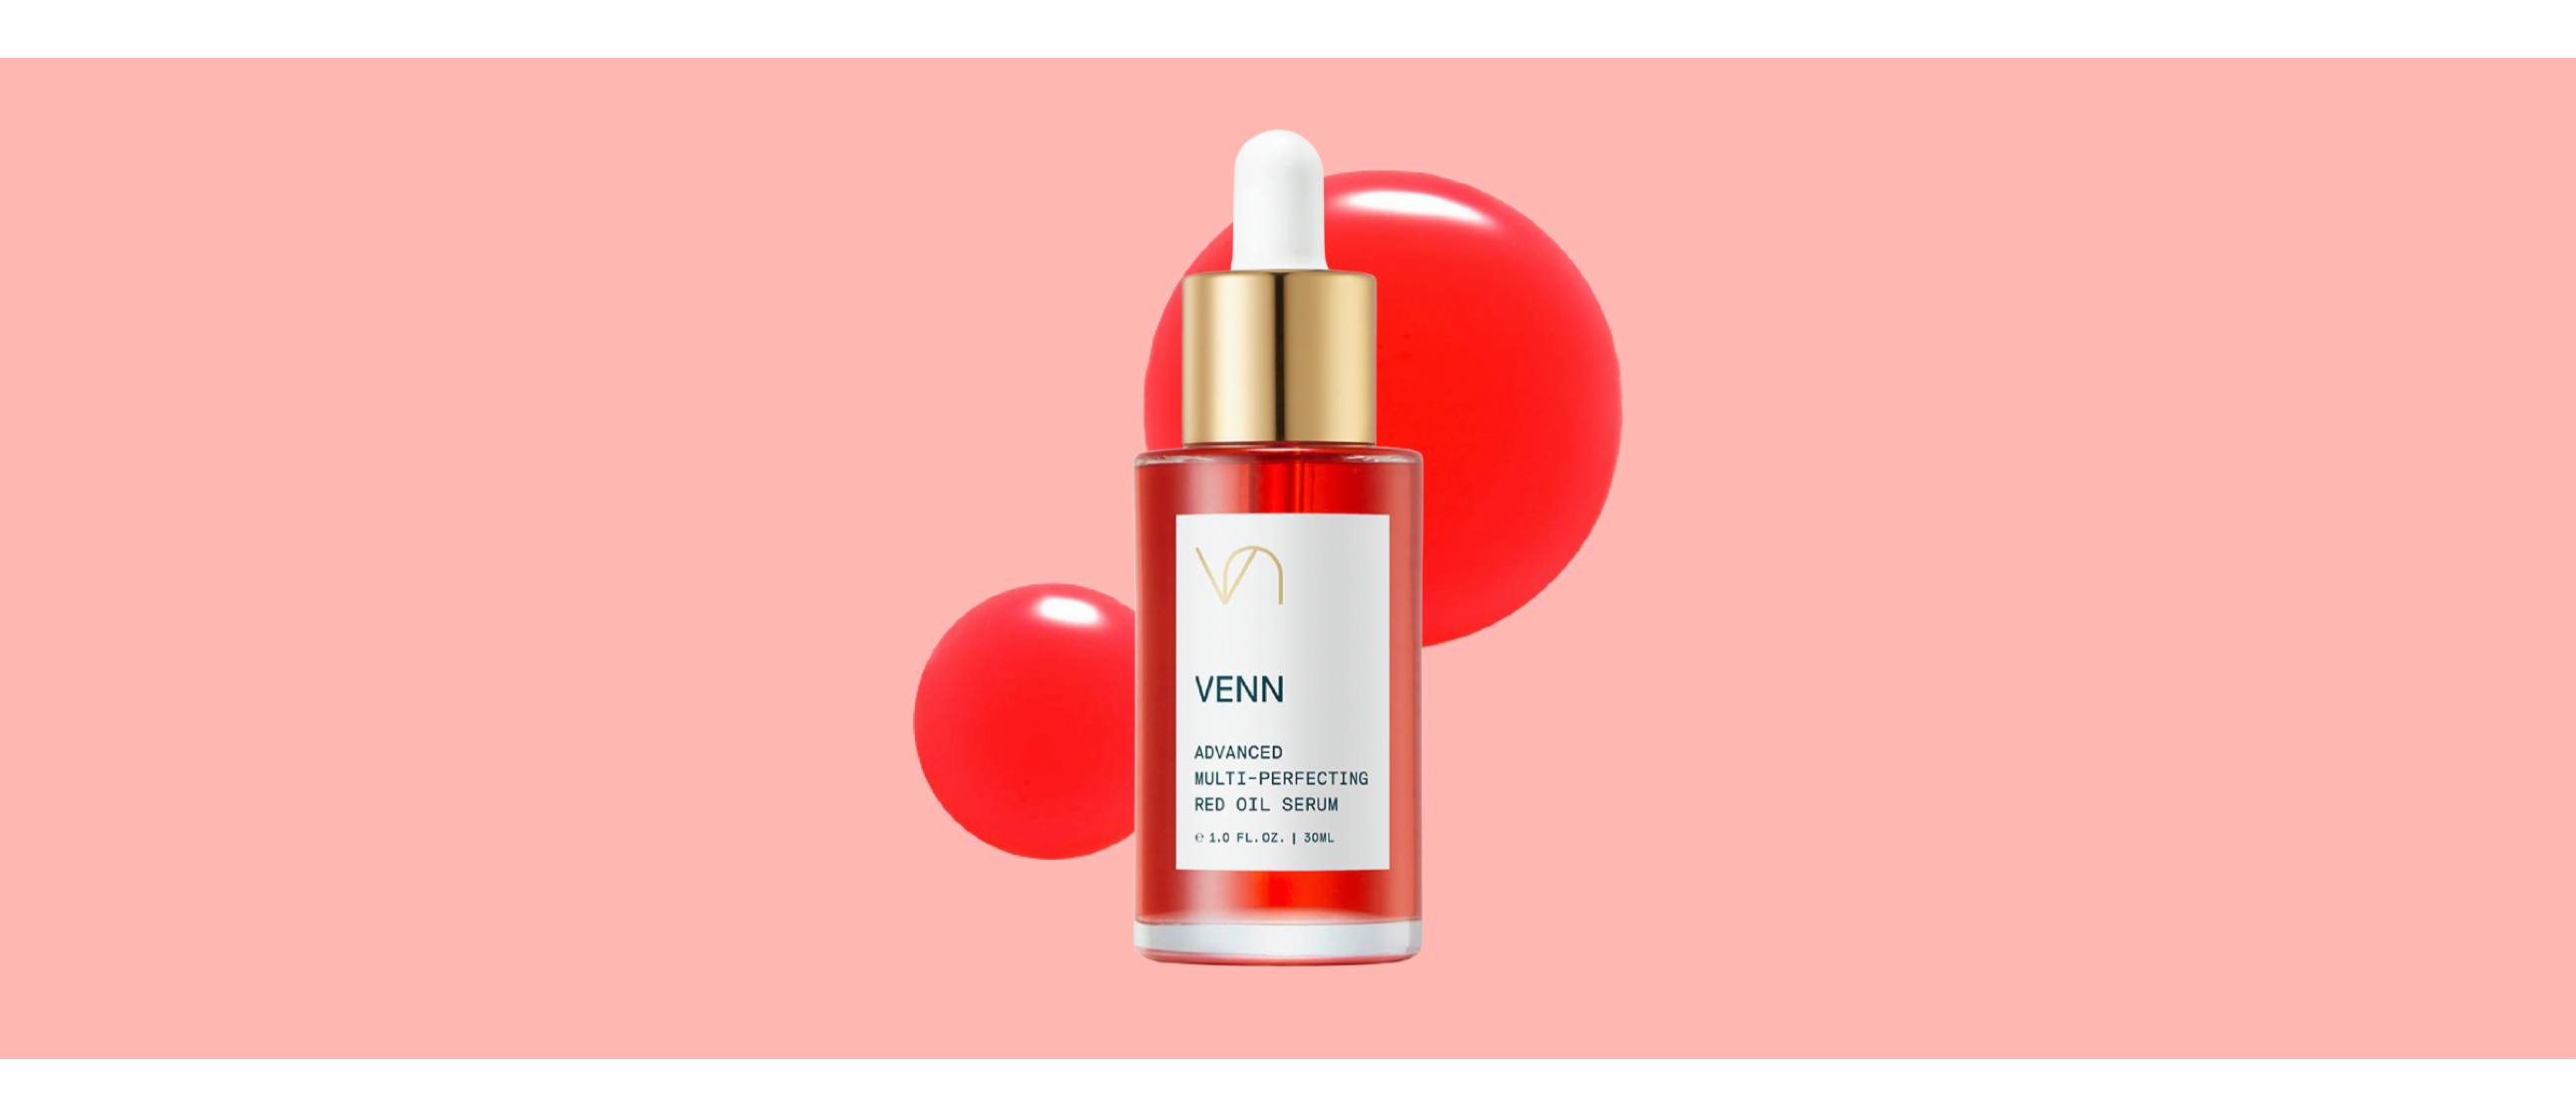 Venn Skincare - Advanced Multi-Perfecting Red Oil Serum